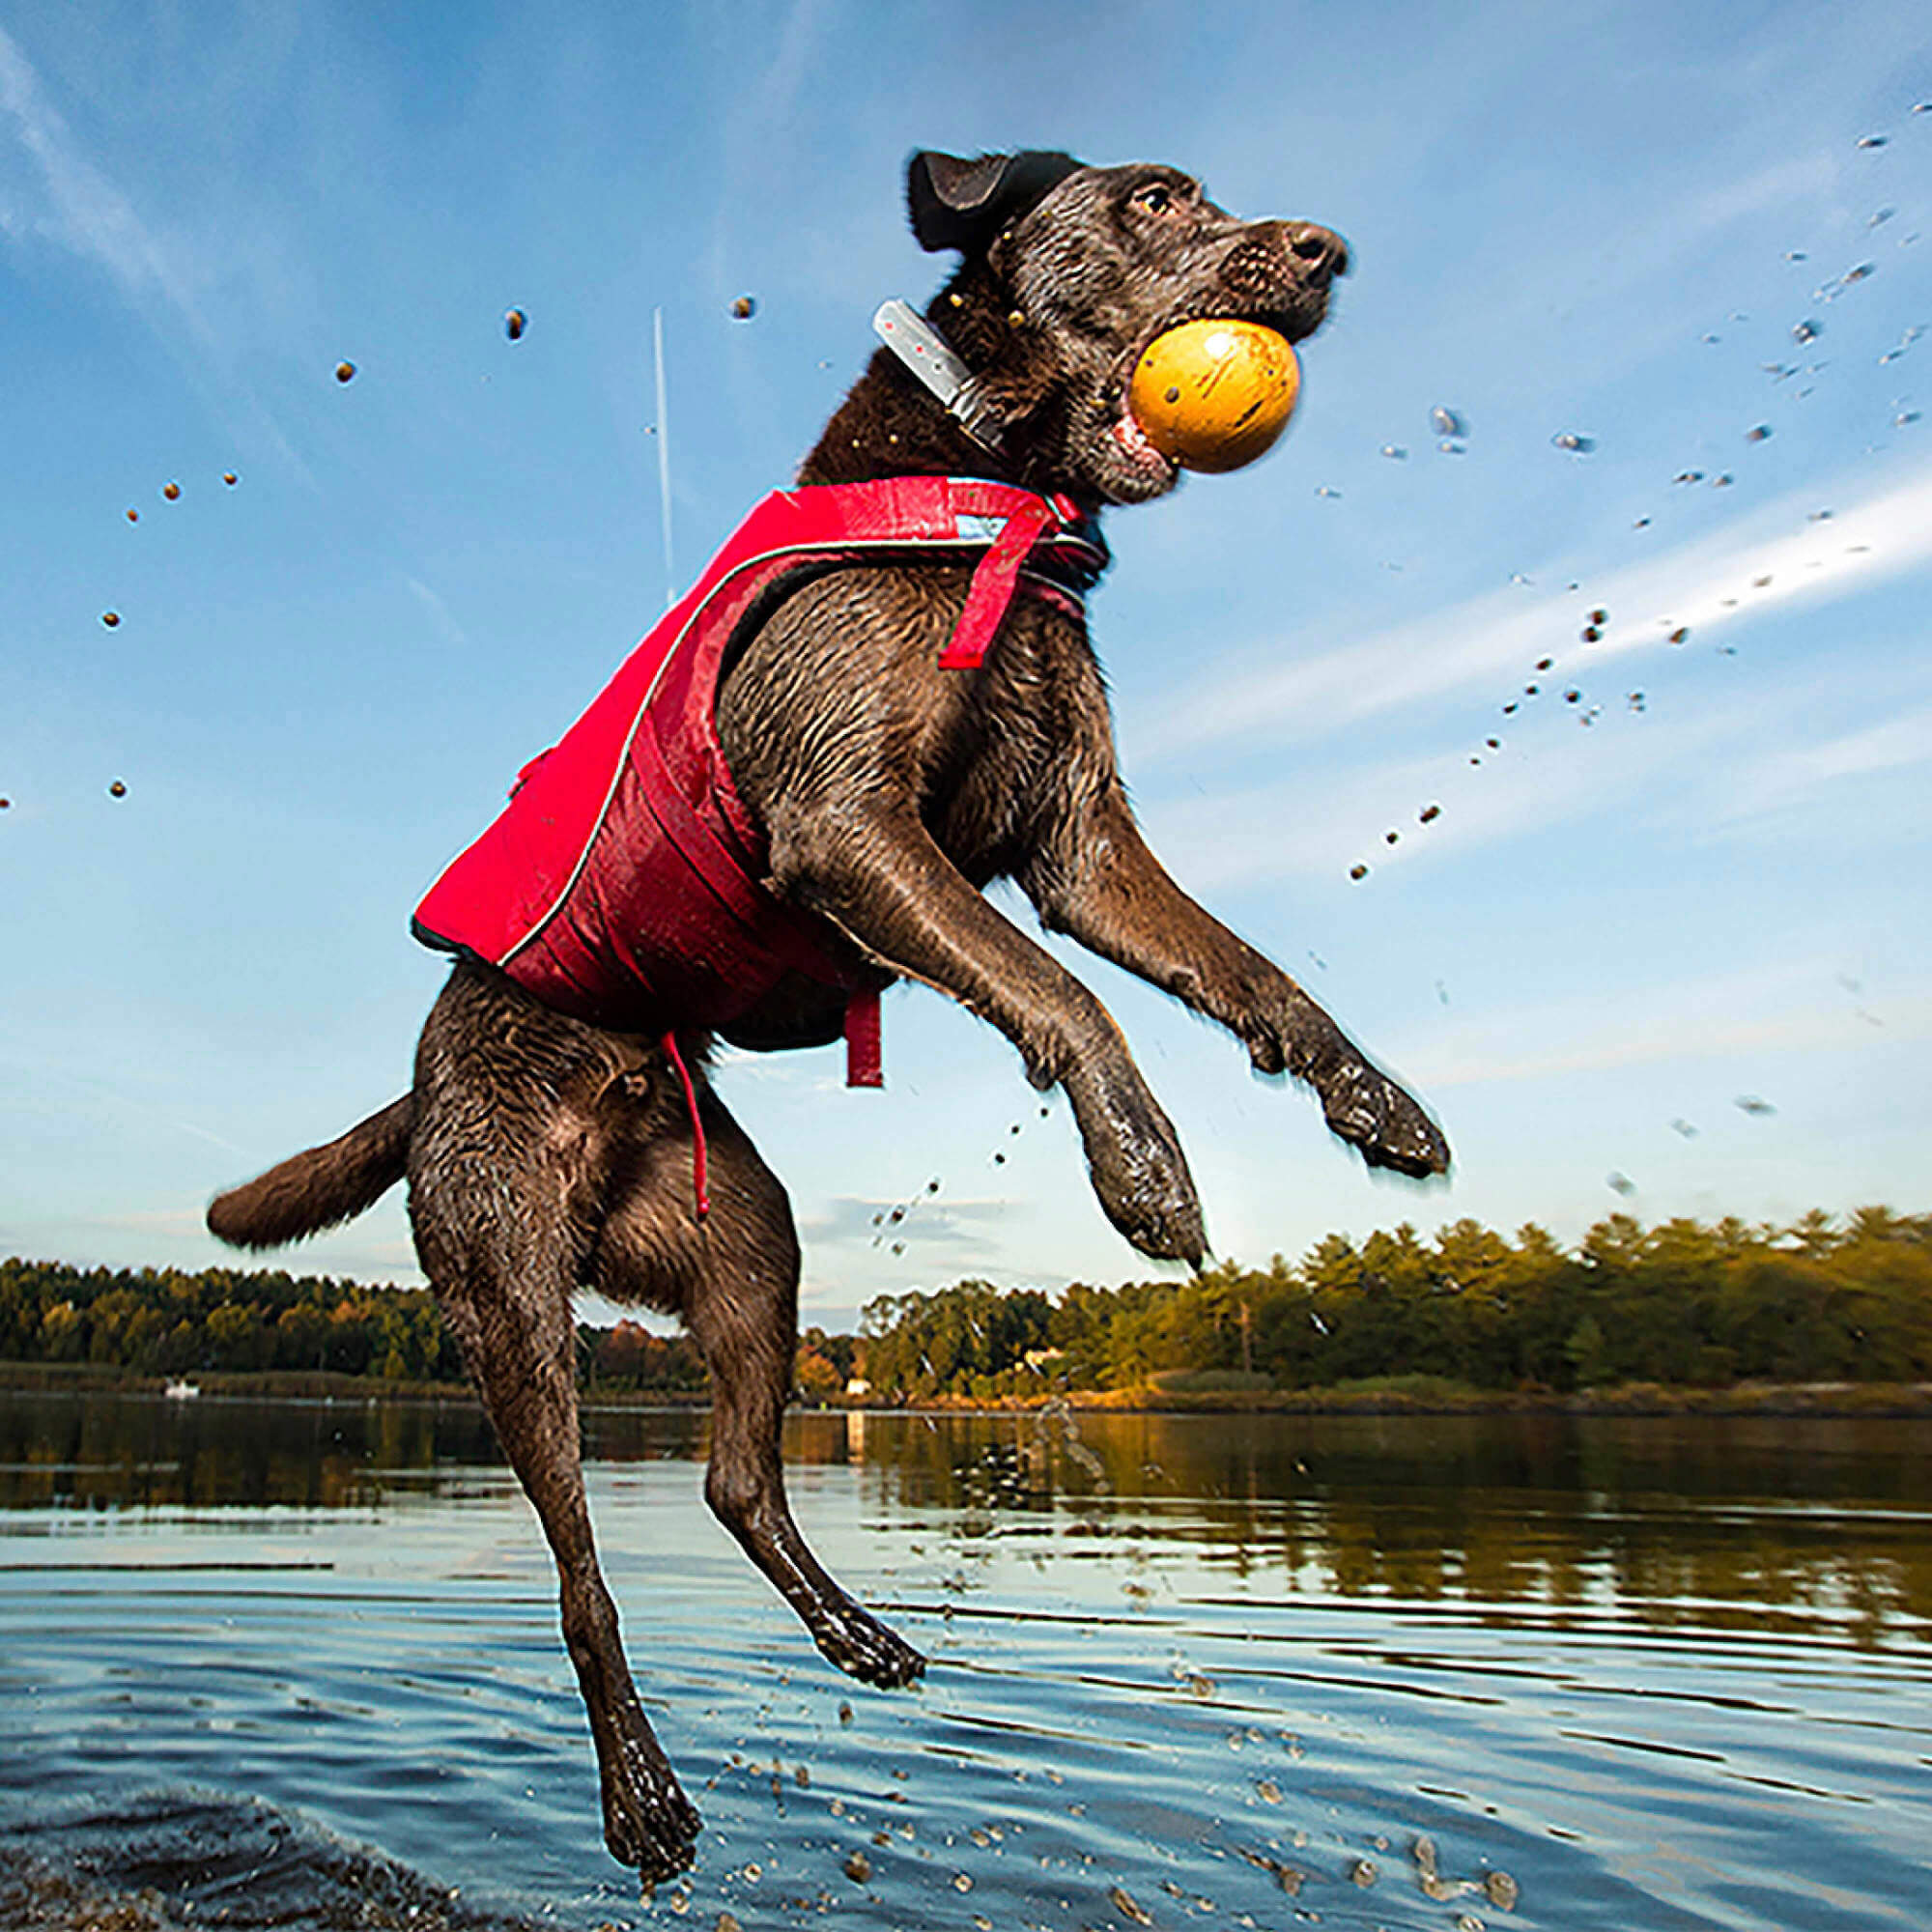 Dog catching a ball outside while wearing kurgo surf n turf dog life jacket